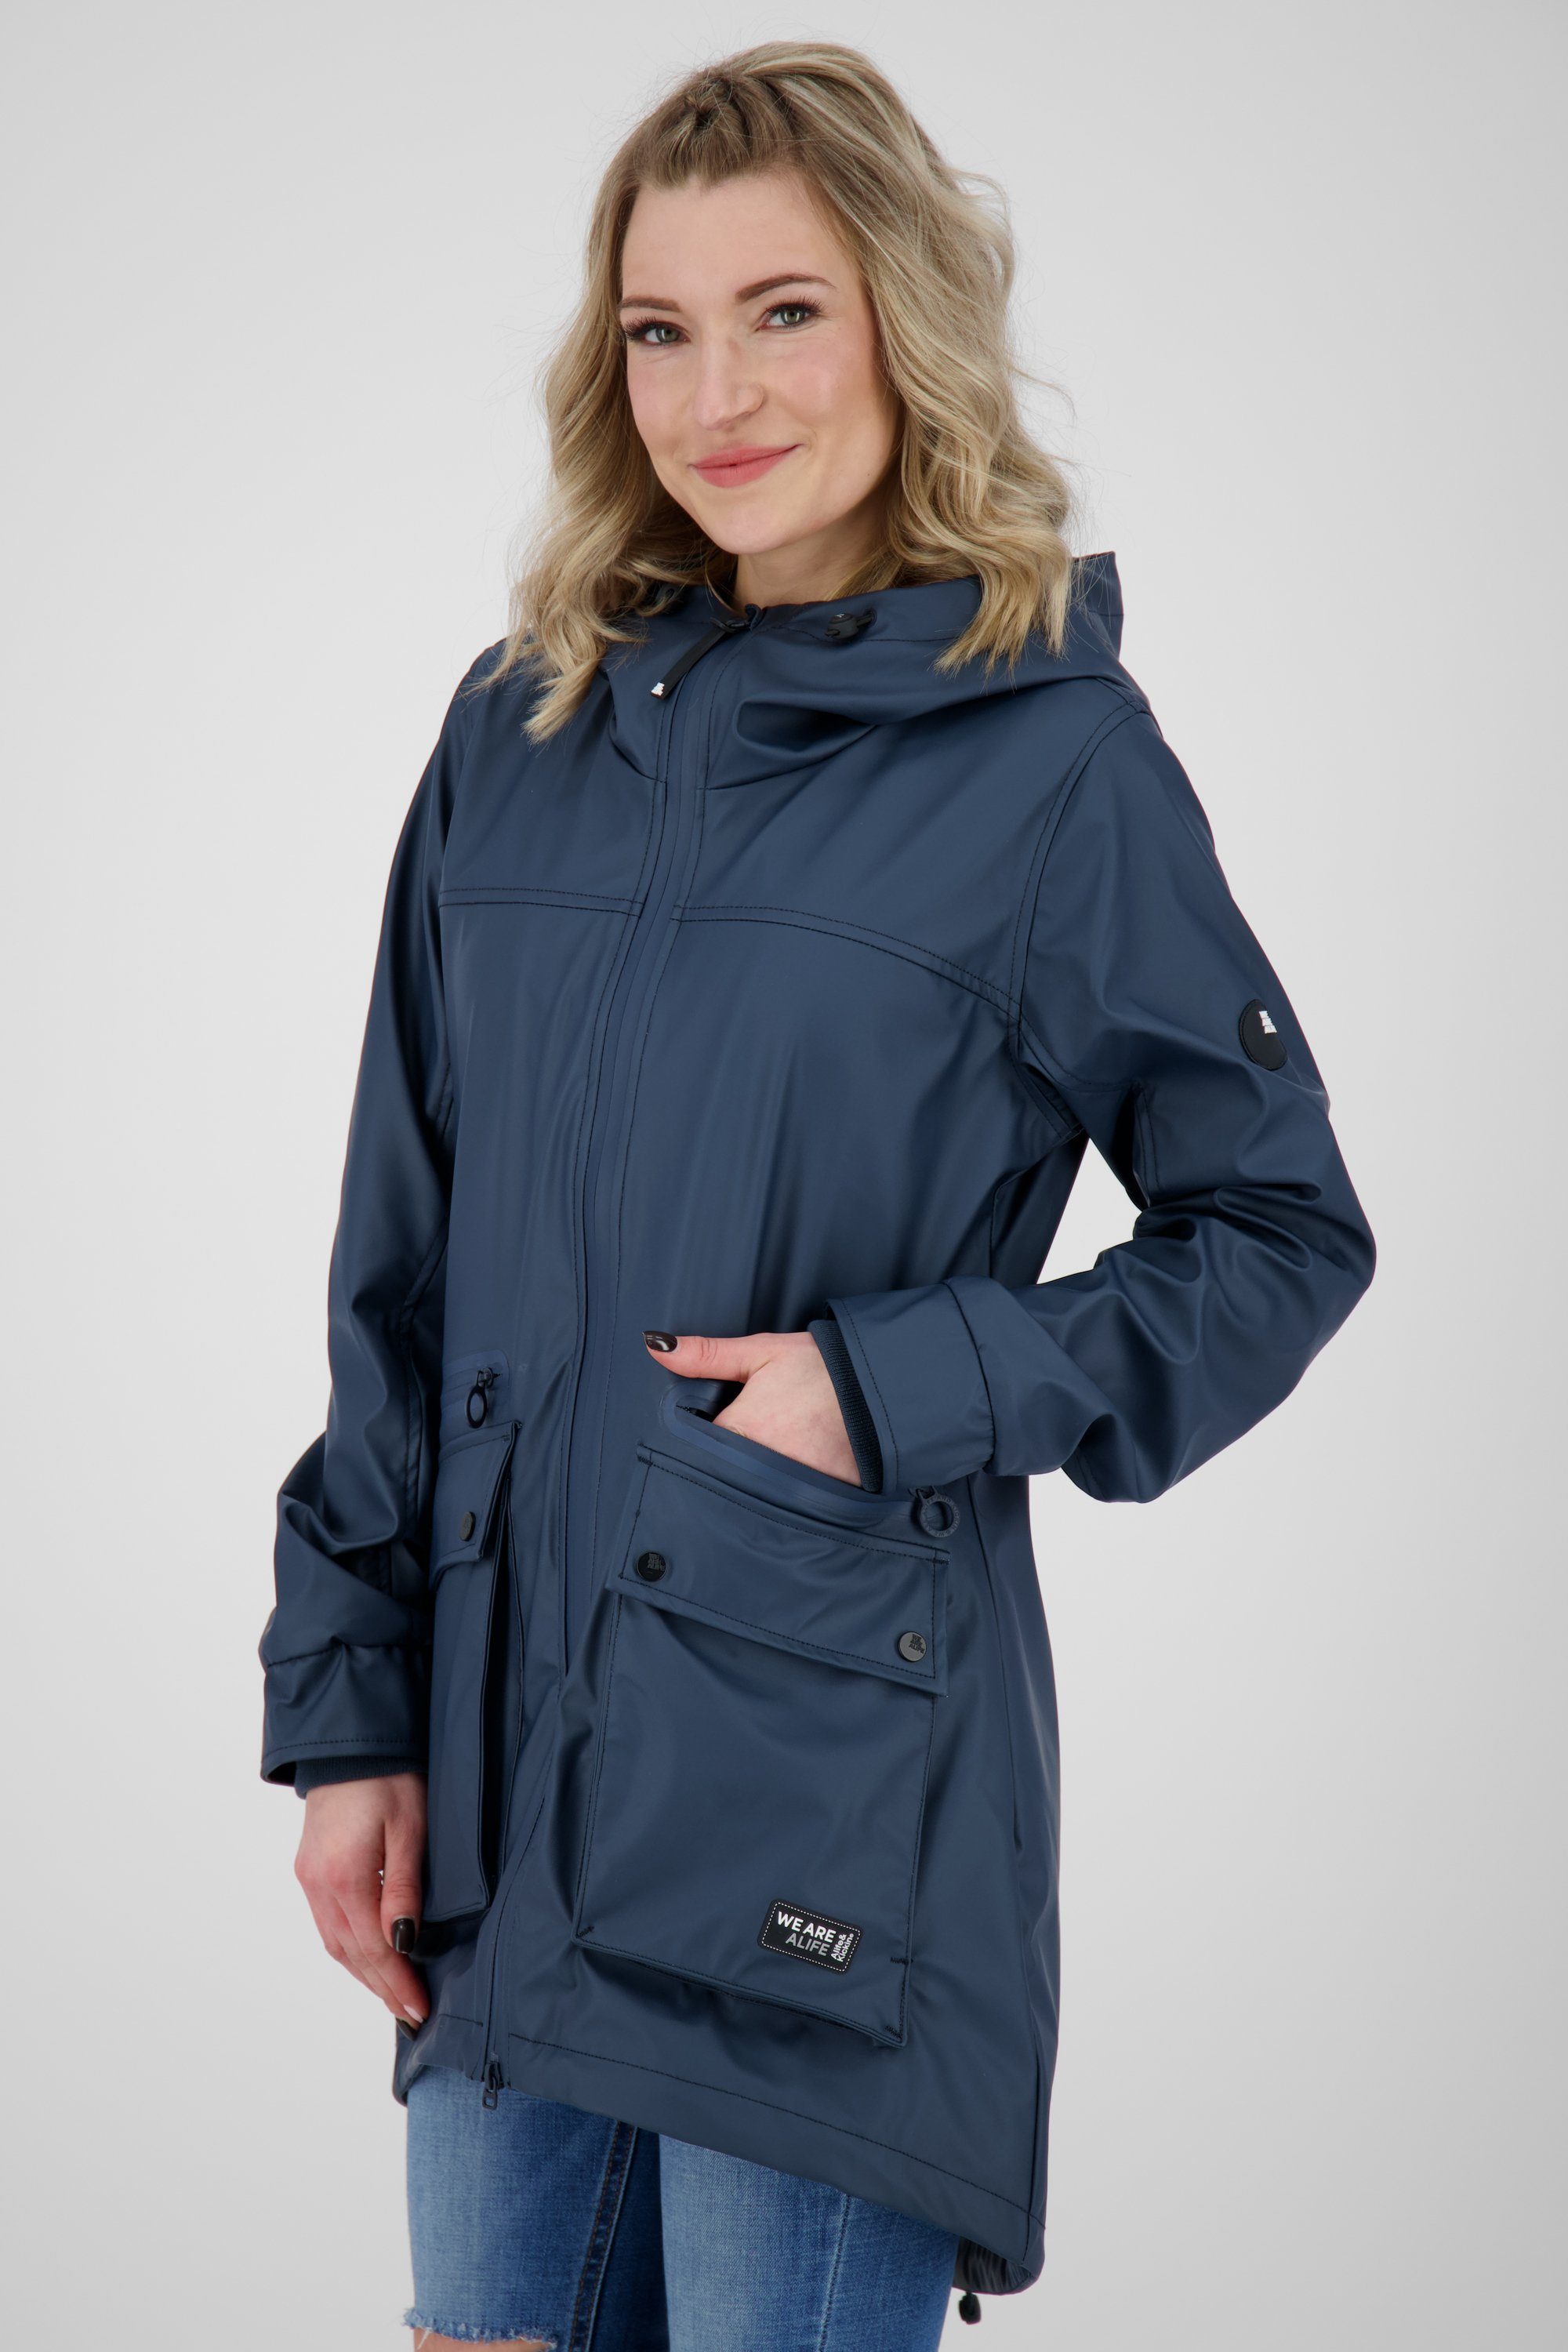 AudreyAK Raincoat Kickin cobalt & leichte Jacke, Sommerjacke Übergangsjacke Alife Damen